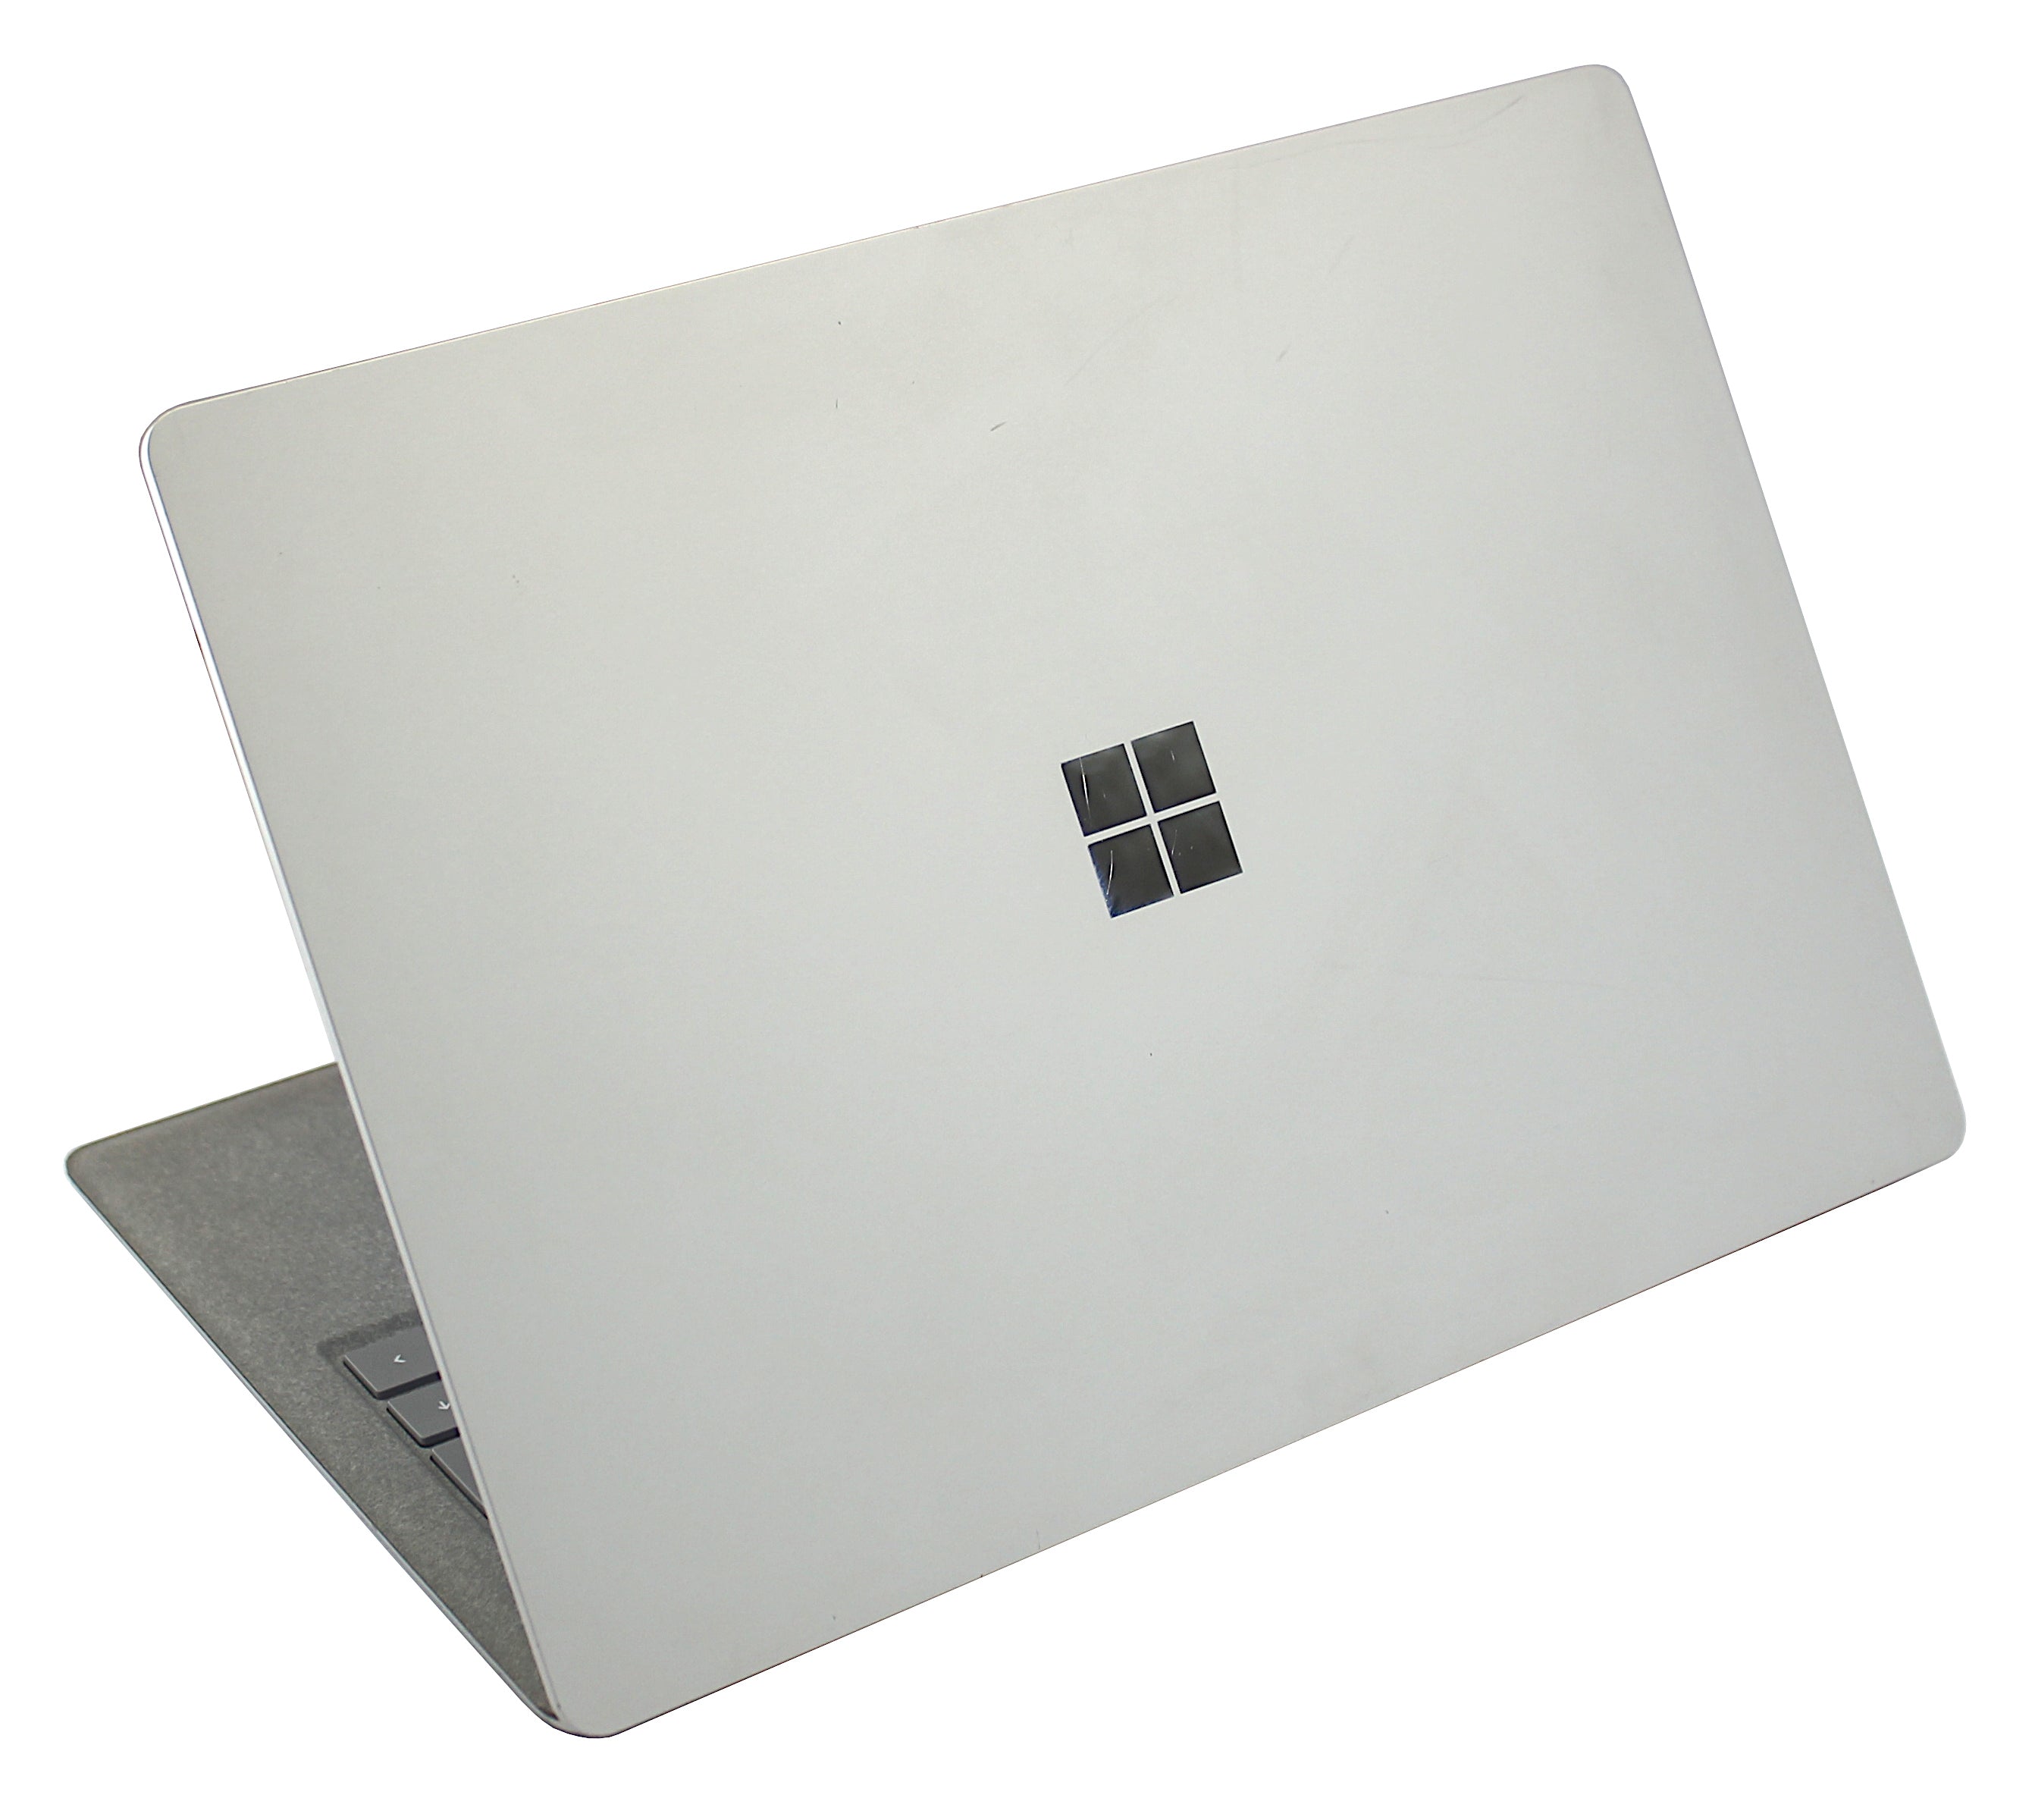 Microsoft Surface Laptop, 13" Core i5 7th Gen, 4GB RAM, 128GB eMMC